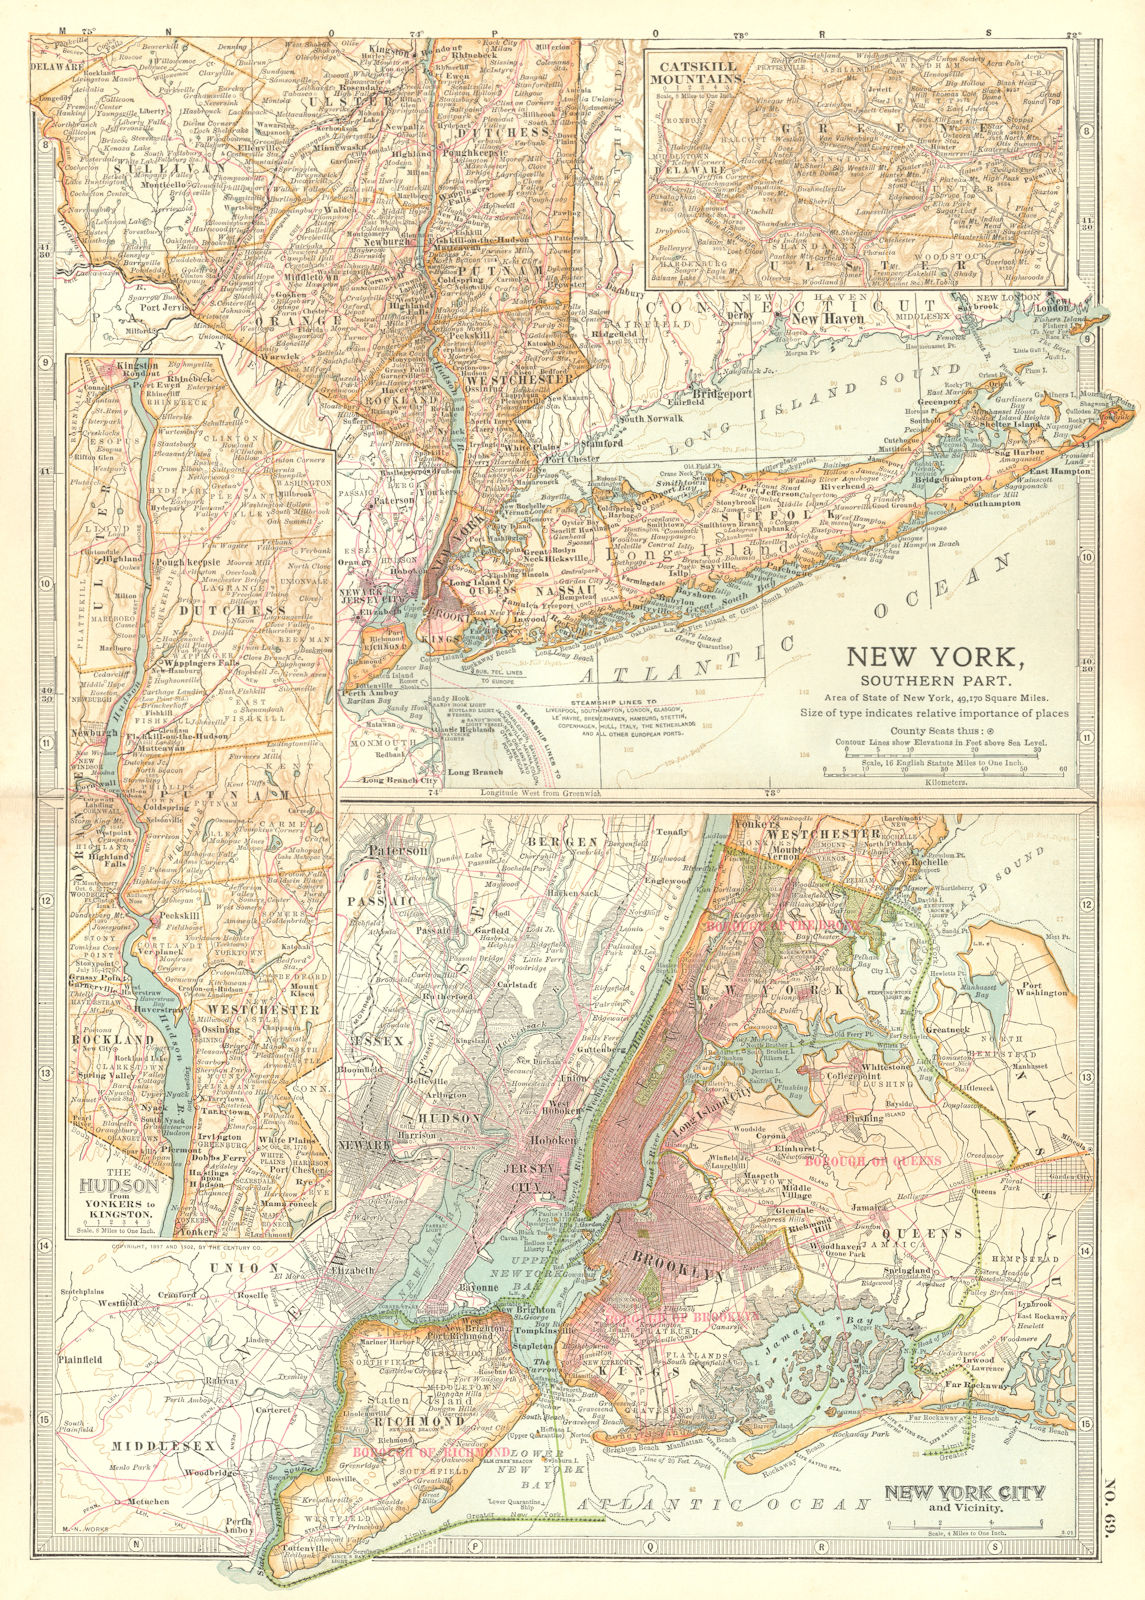 NEW YORK. South; New York City, Long Island; Inset Catskills, Hudson 1903 map